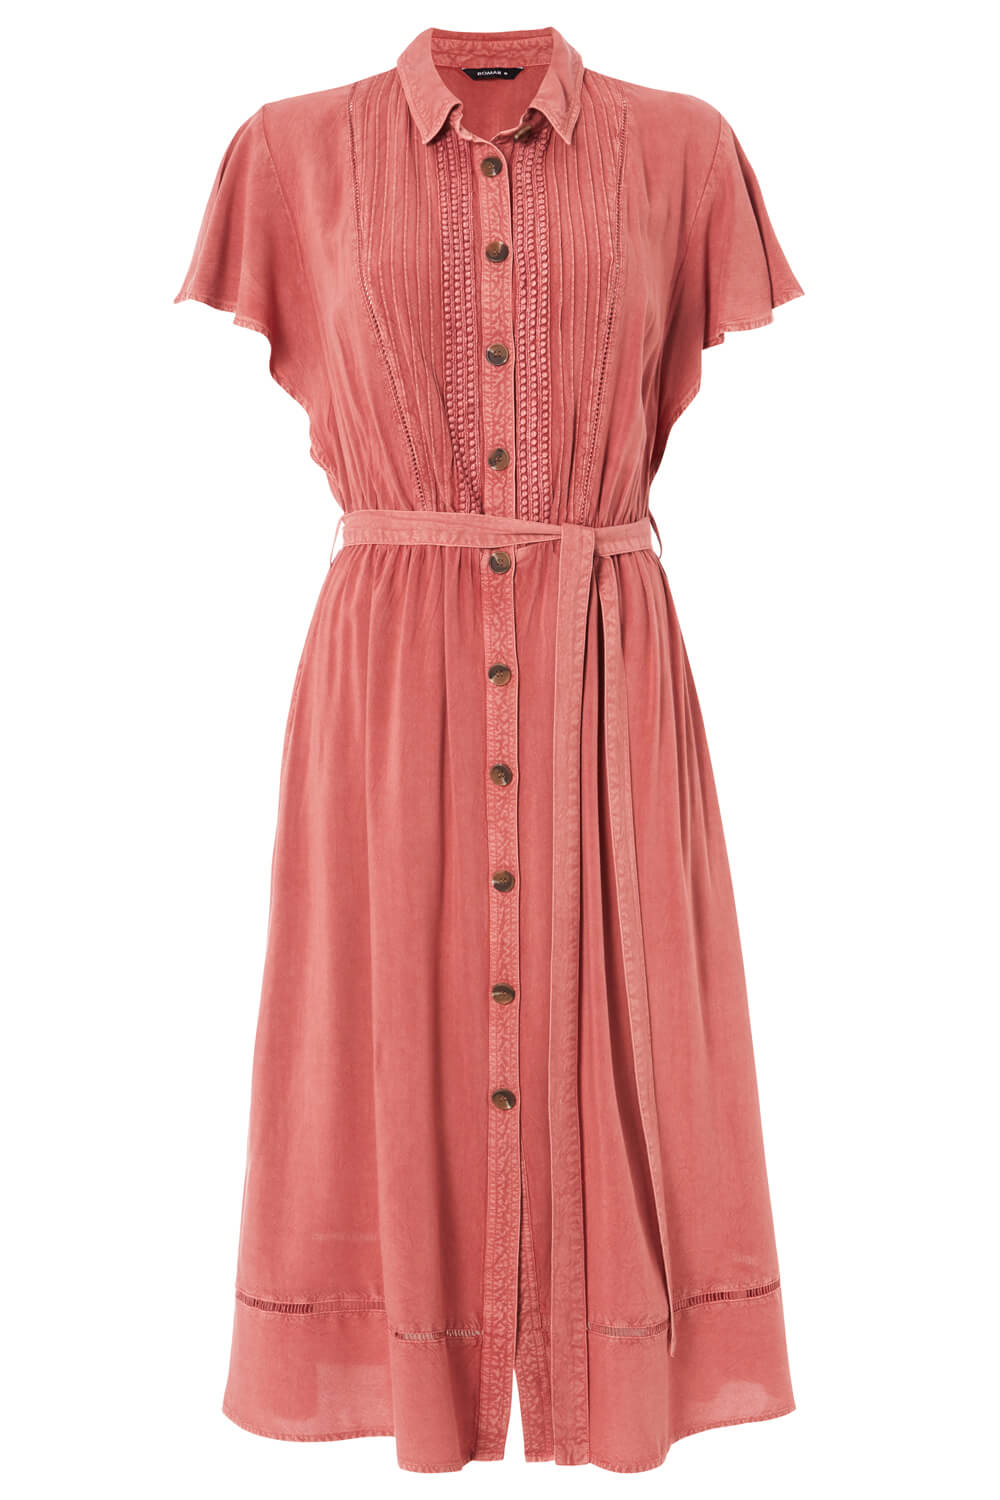 Embroidered Midi Length Shirt Dress in Pink - Roman Originals UK